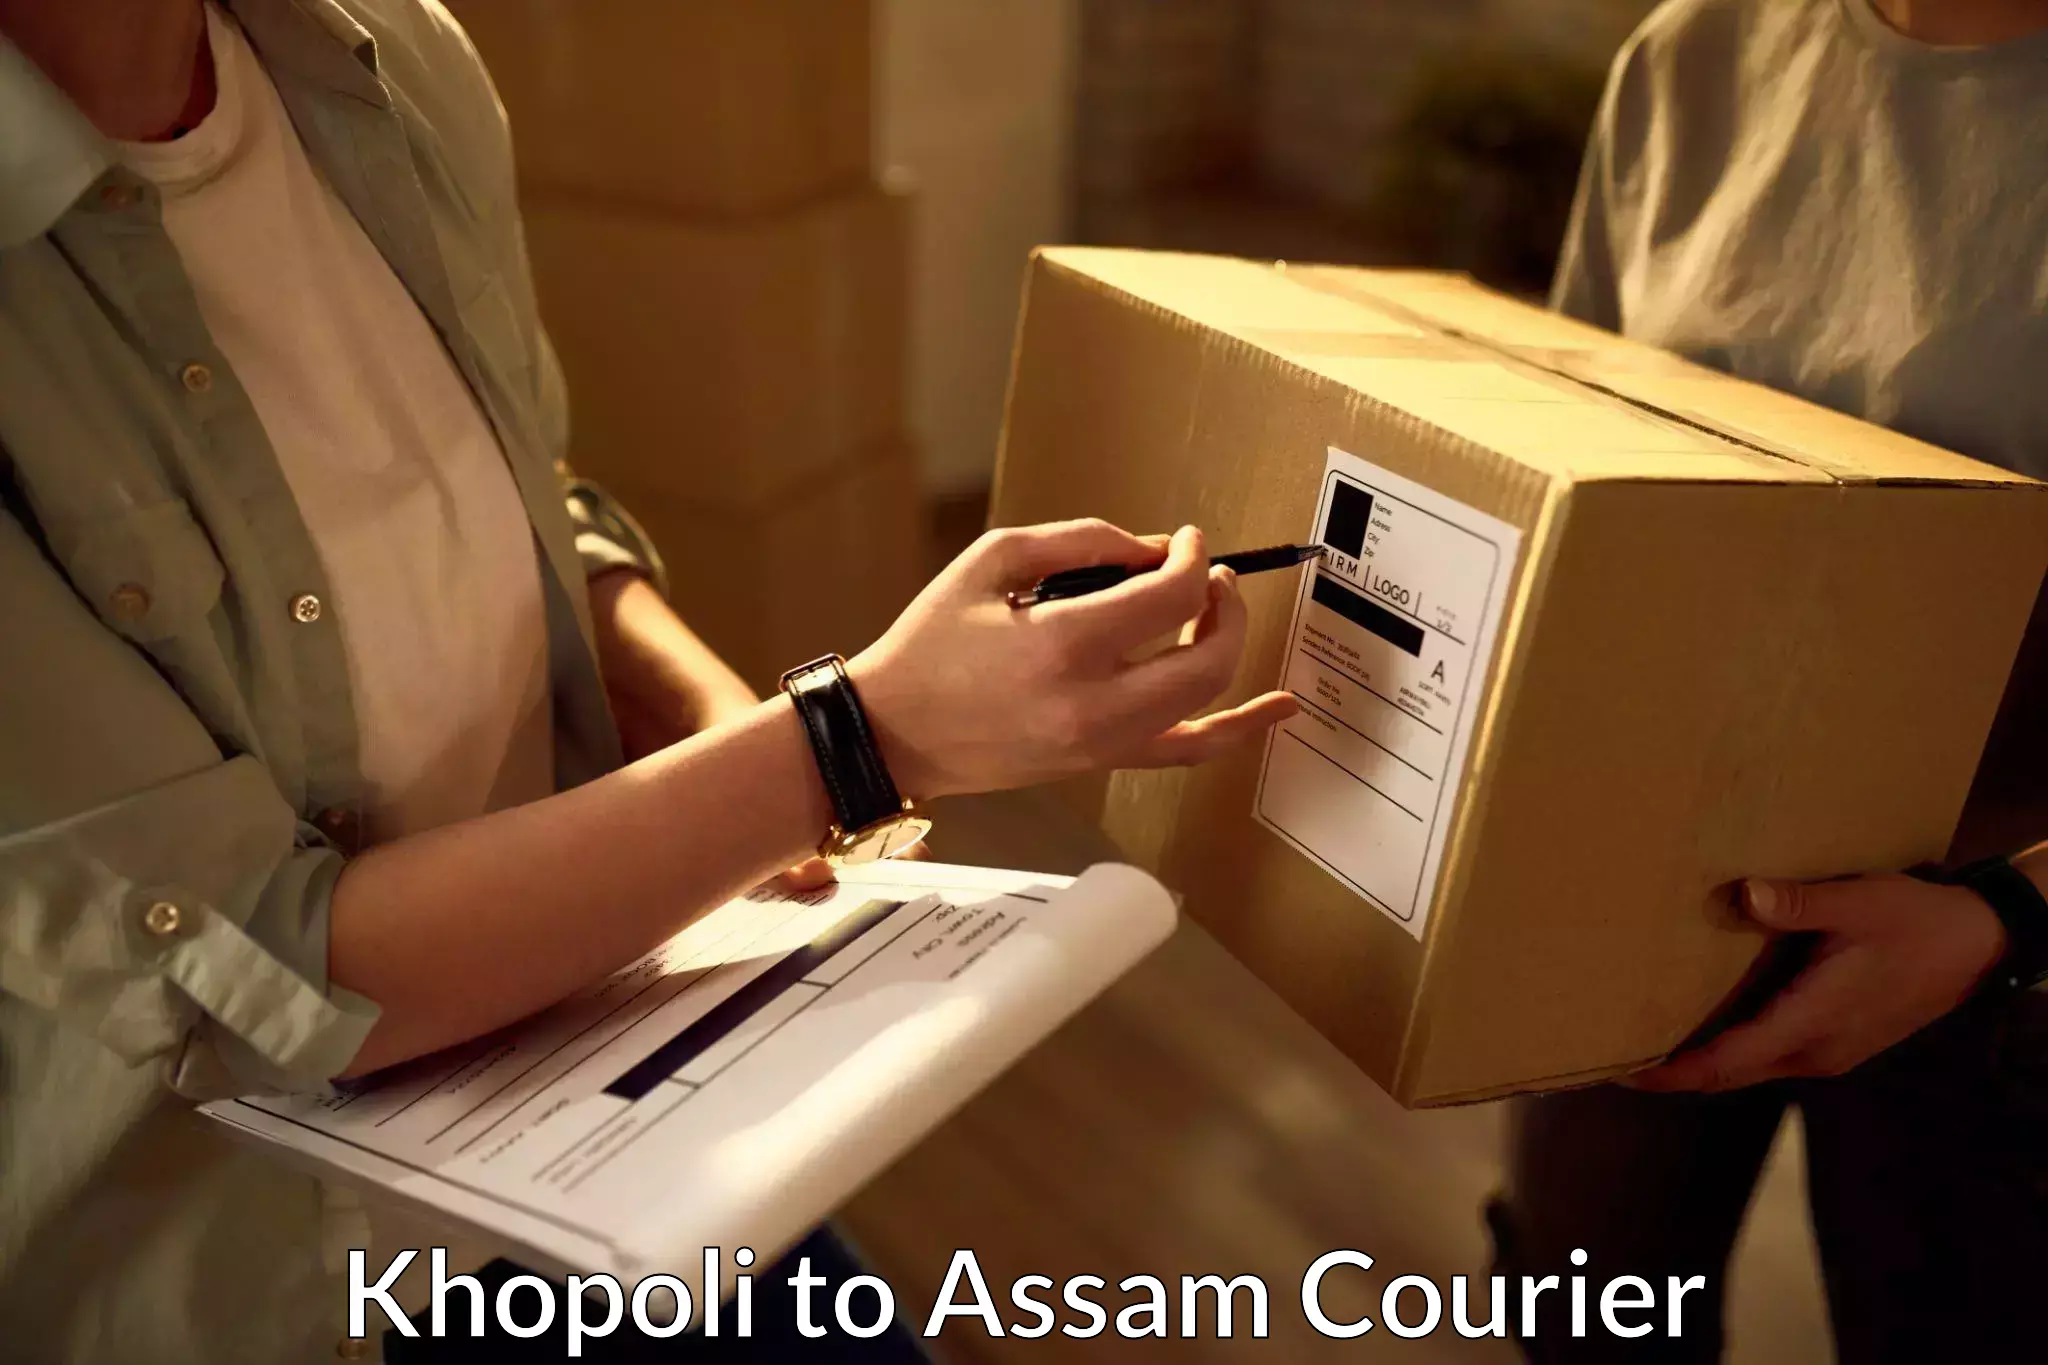 Express delivery network Khopoli to Assam